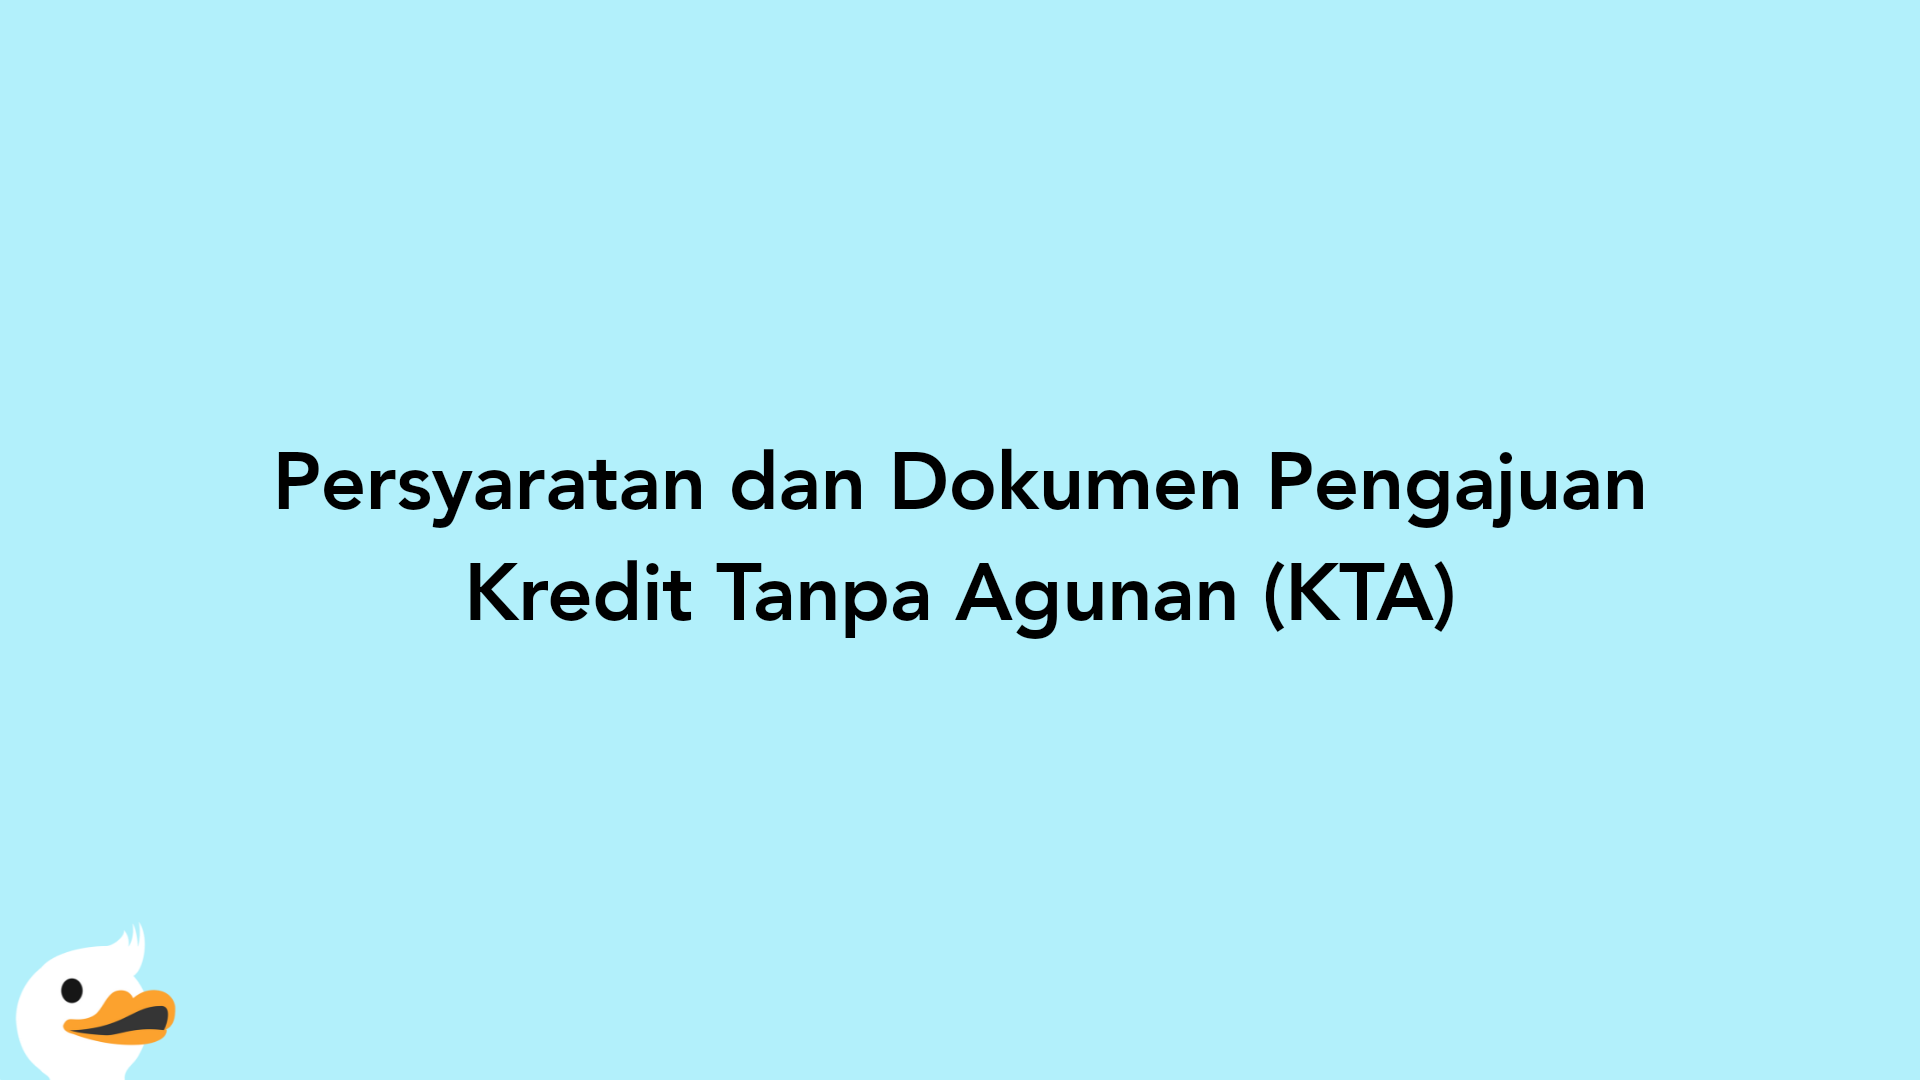 Persyaratan dan Dokumen Pengajuan Kredit Tanpa Agunan (KTA)